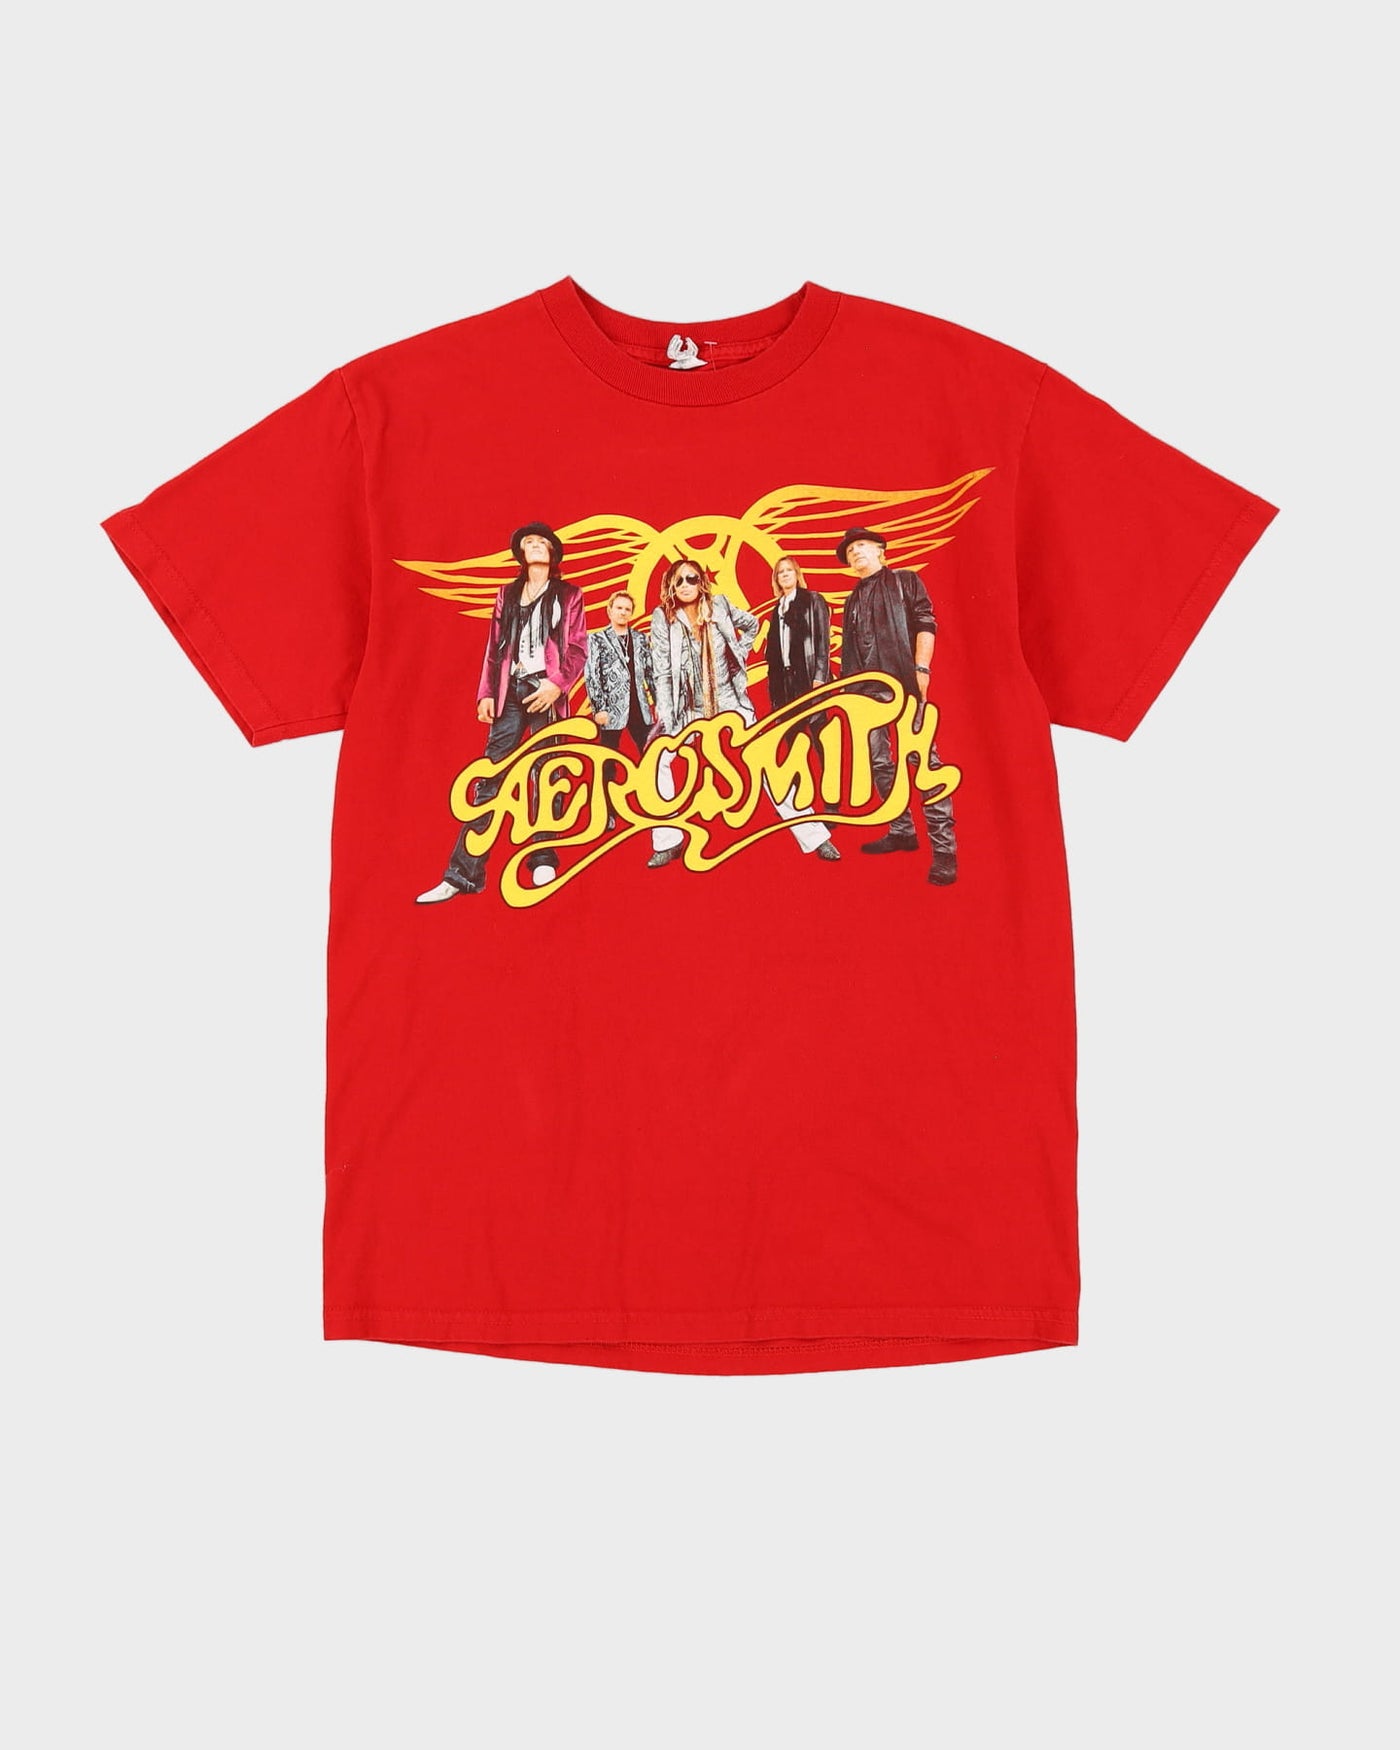 Aerosmith Red Band T-Shirt - M